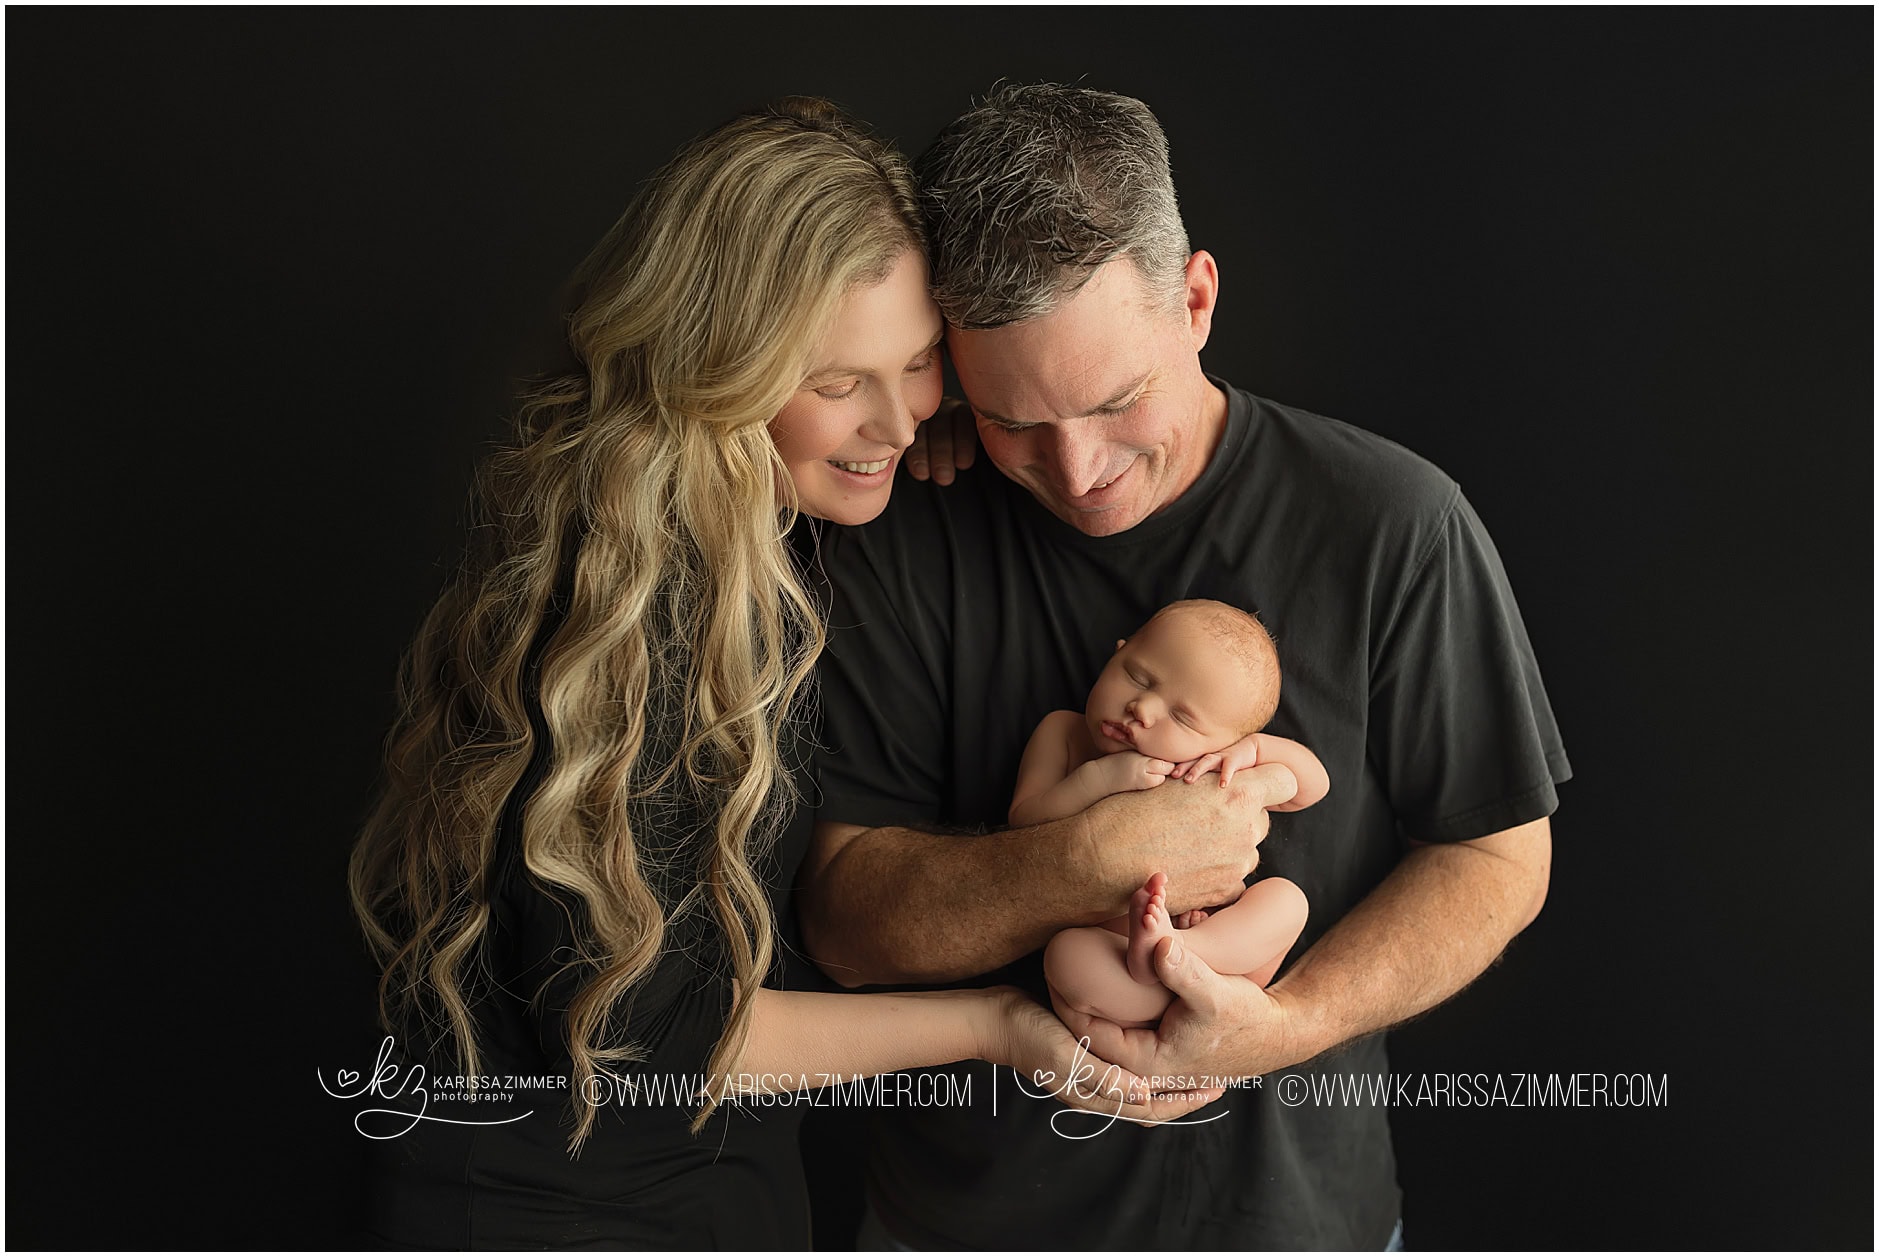 New parents pose with their newborn baby girl in newborn photography studio near Mechanicsburg PA